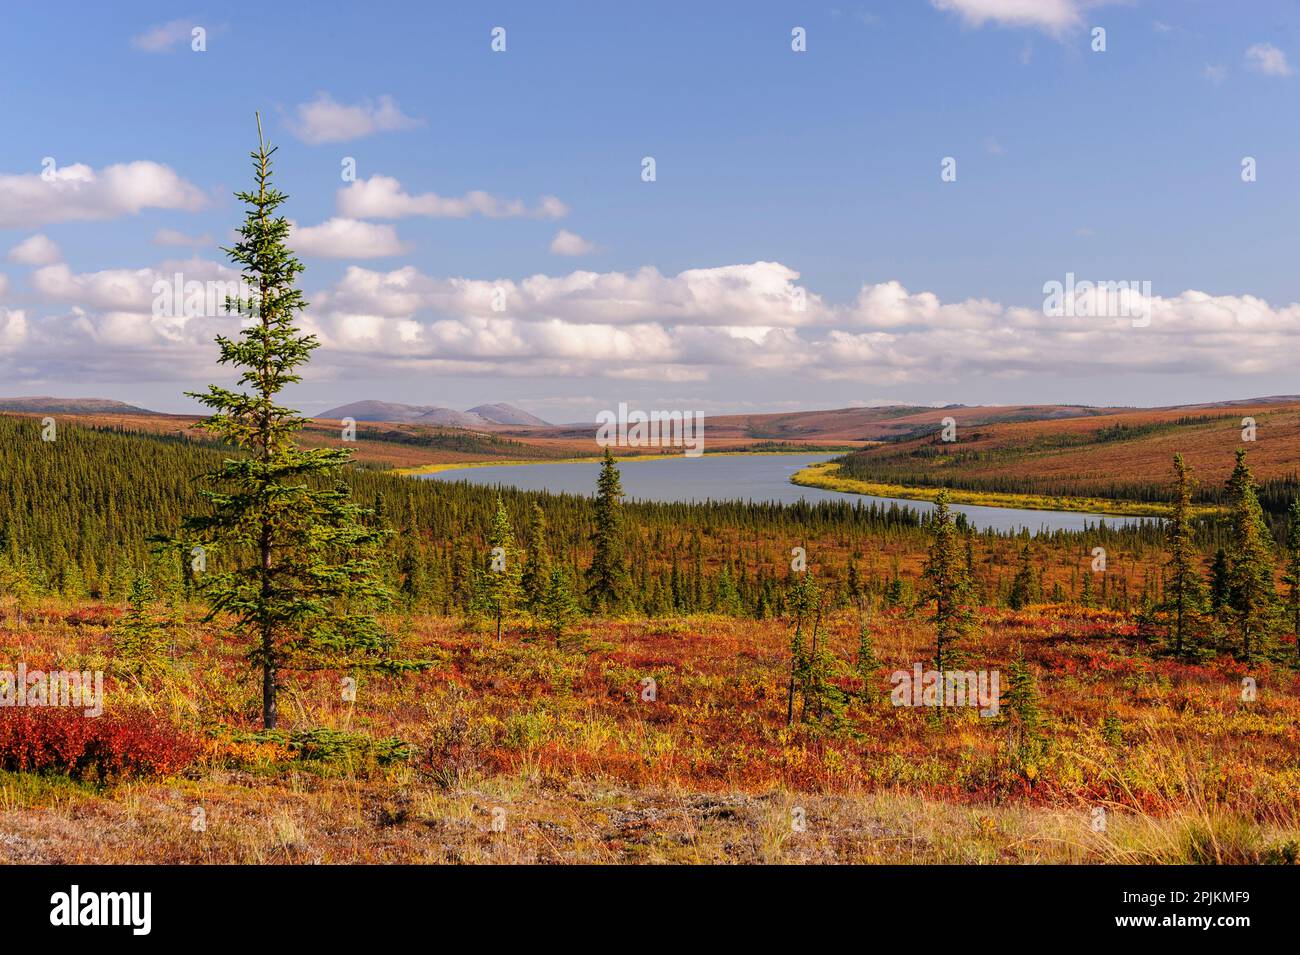 USA, Alaska, Kotzebue, Noatak River. Autumn colors along the Noatak River. Stock Photo